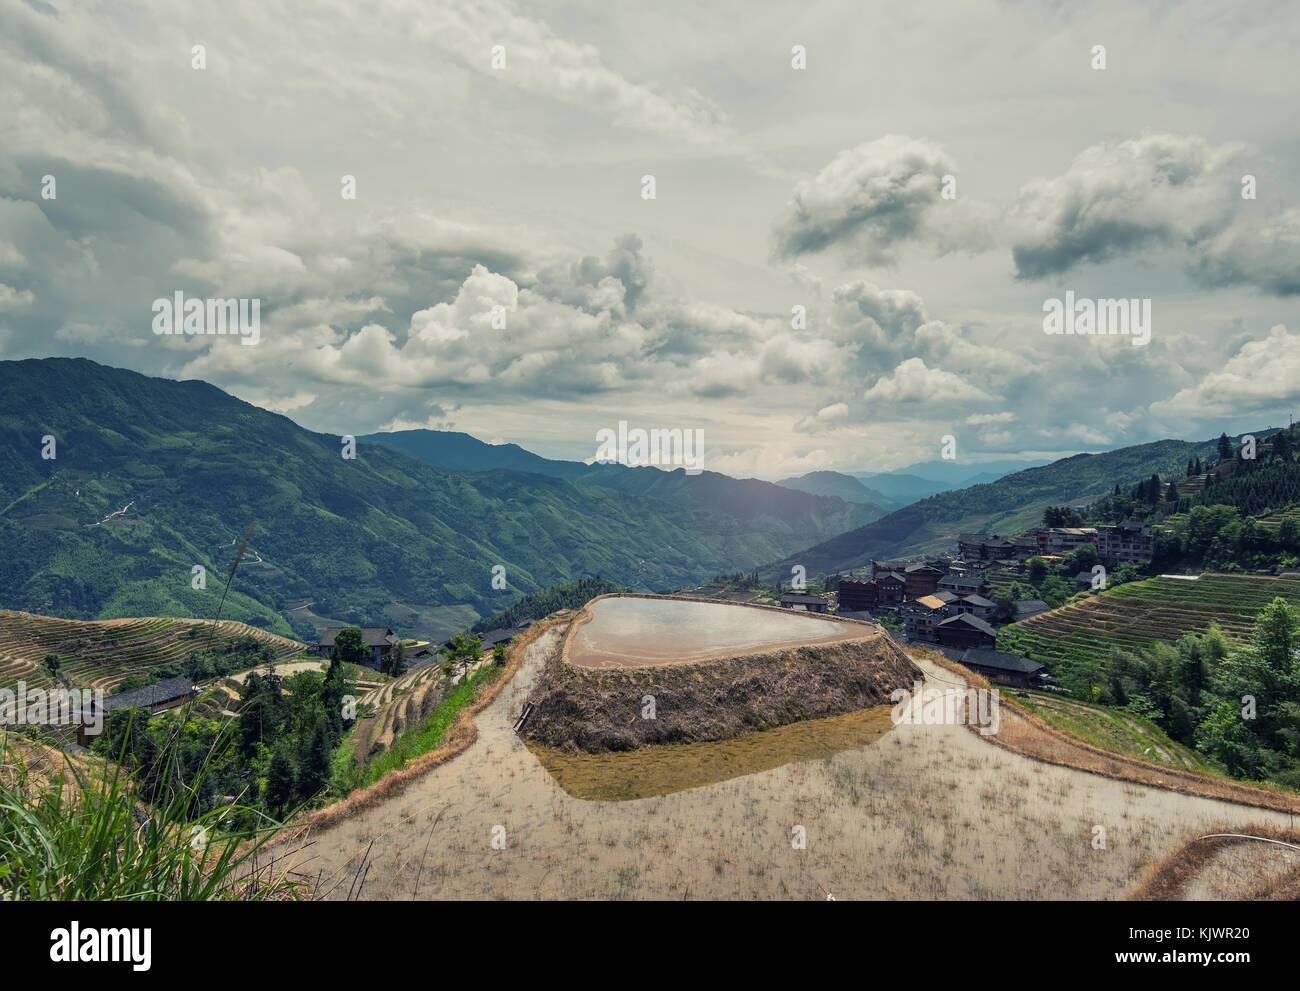 Longji terrazze di riso trova guilin Guangxi Zhuang regione autonoma di Guangxi aka provincia della Cina Foto Stock